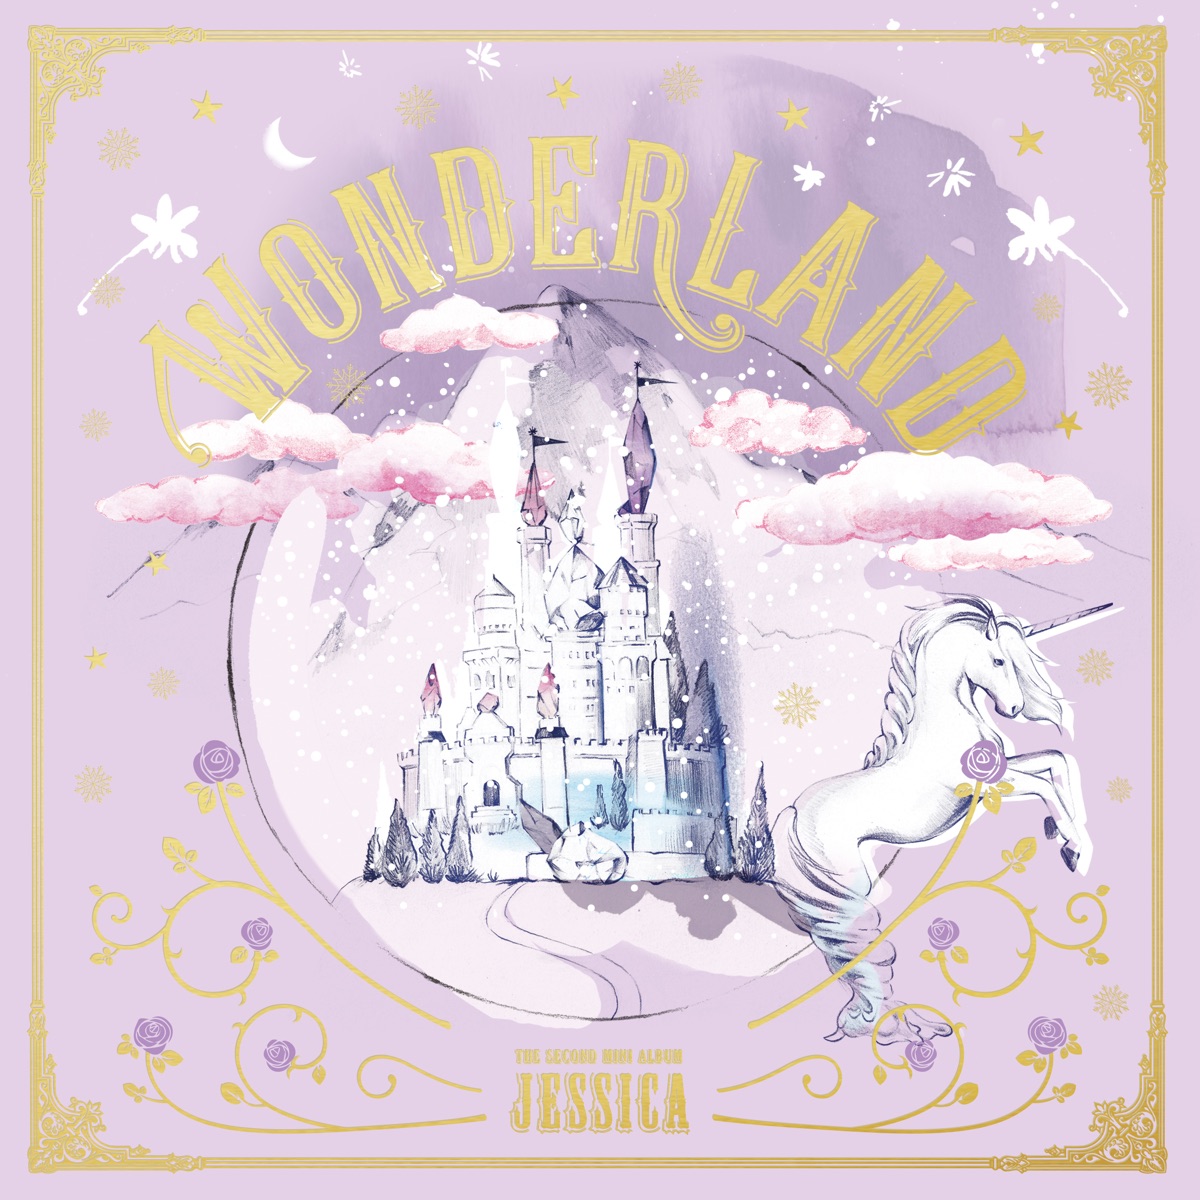 JESSICA – Wonderland (English Version) – EP